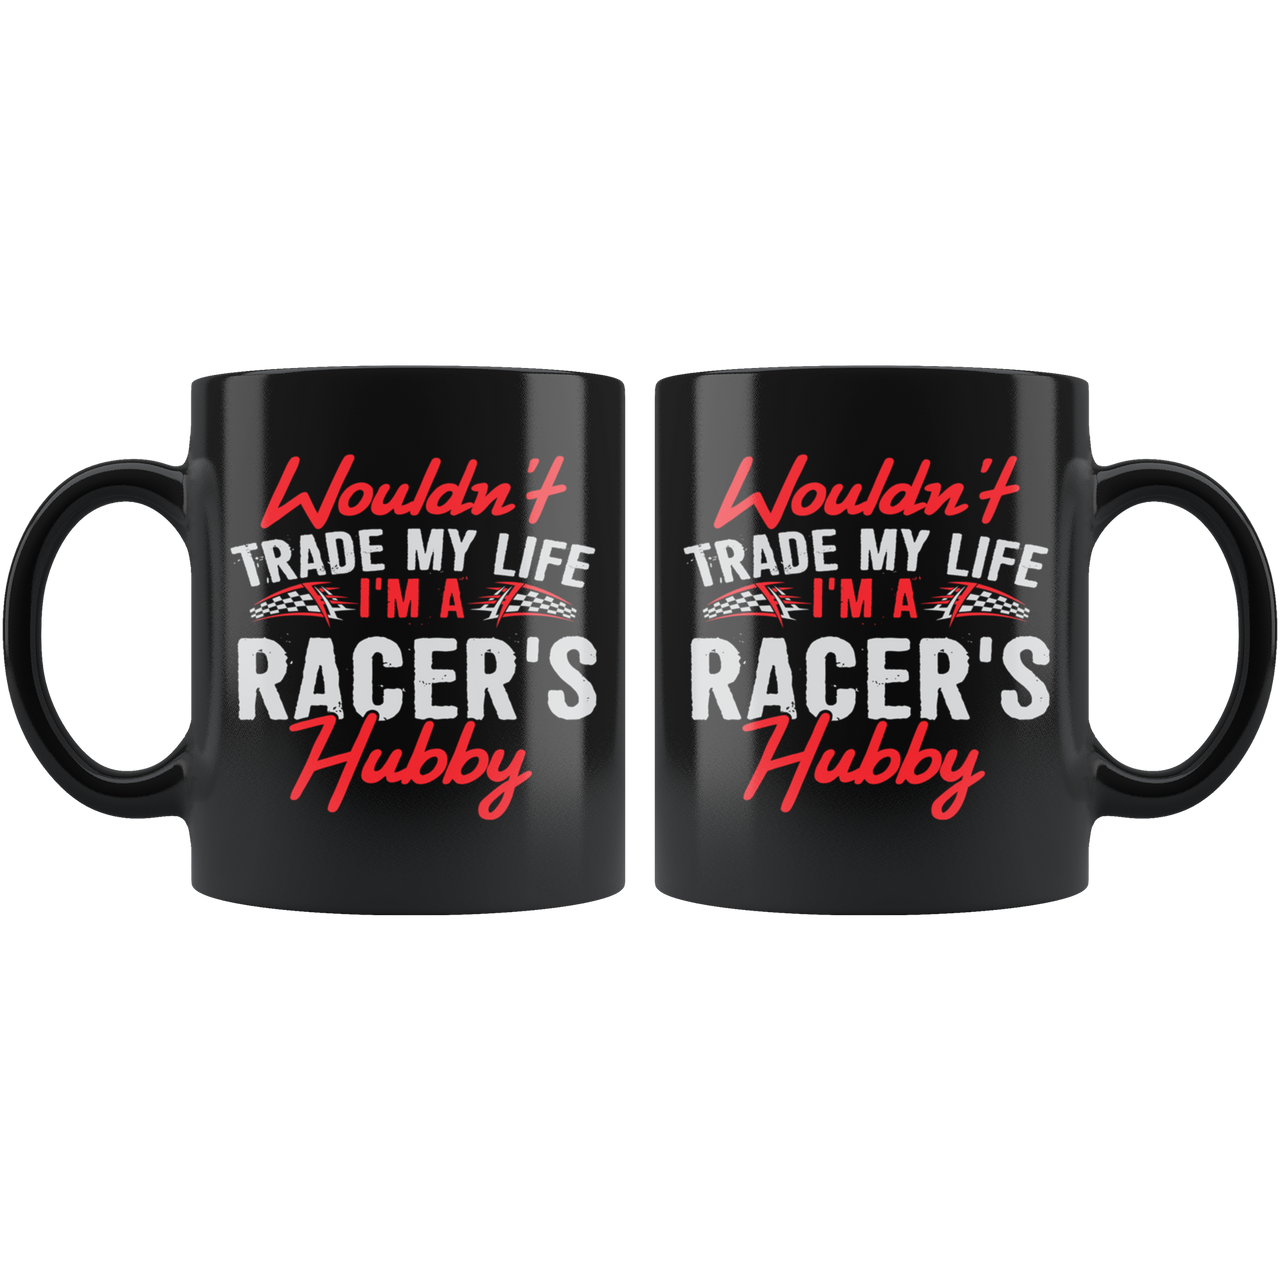 Wouldn't Trade My Life I'm A Racer's Hubby Mug!